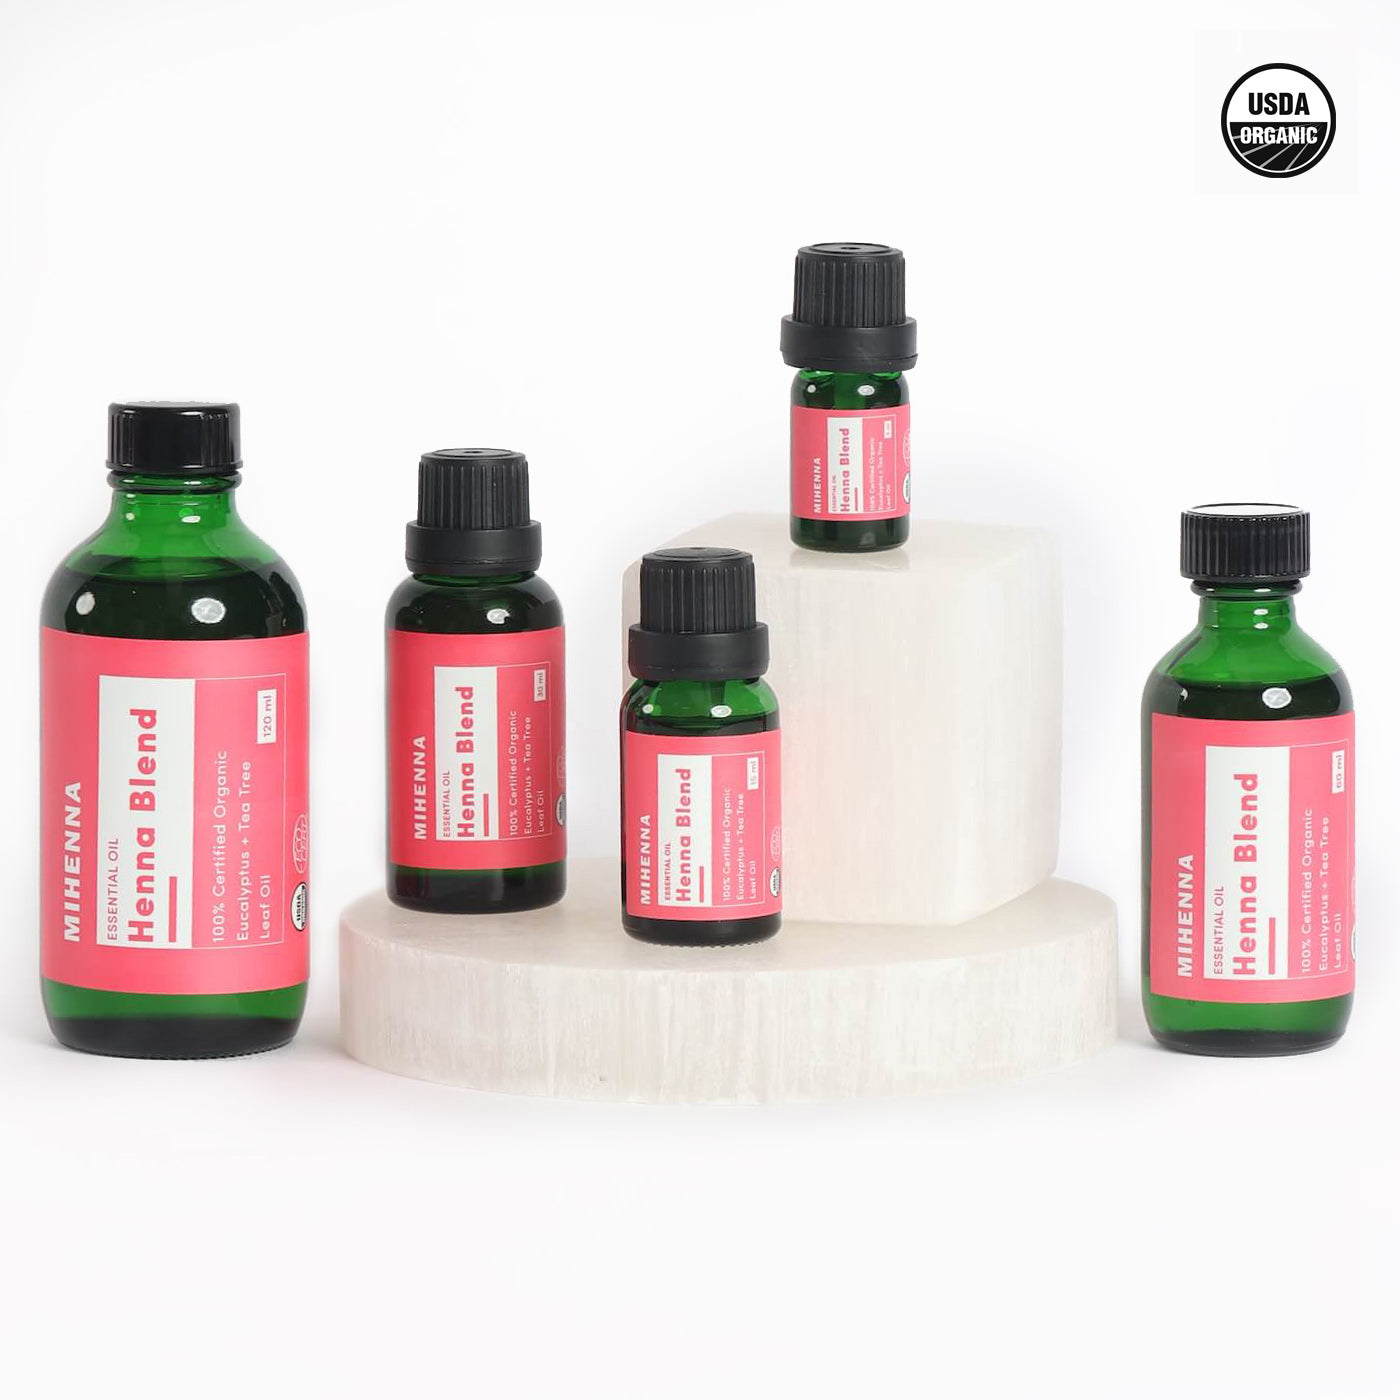 Mihenna's USDA Certified Organic Henna Blend Oil Bottles in different sizes